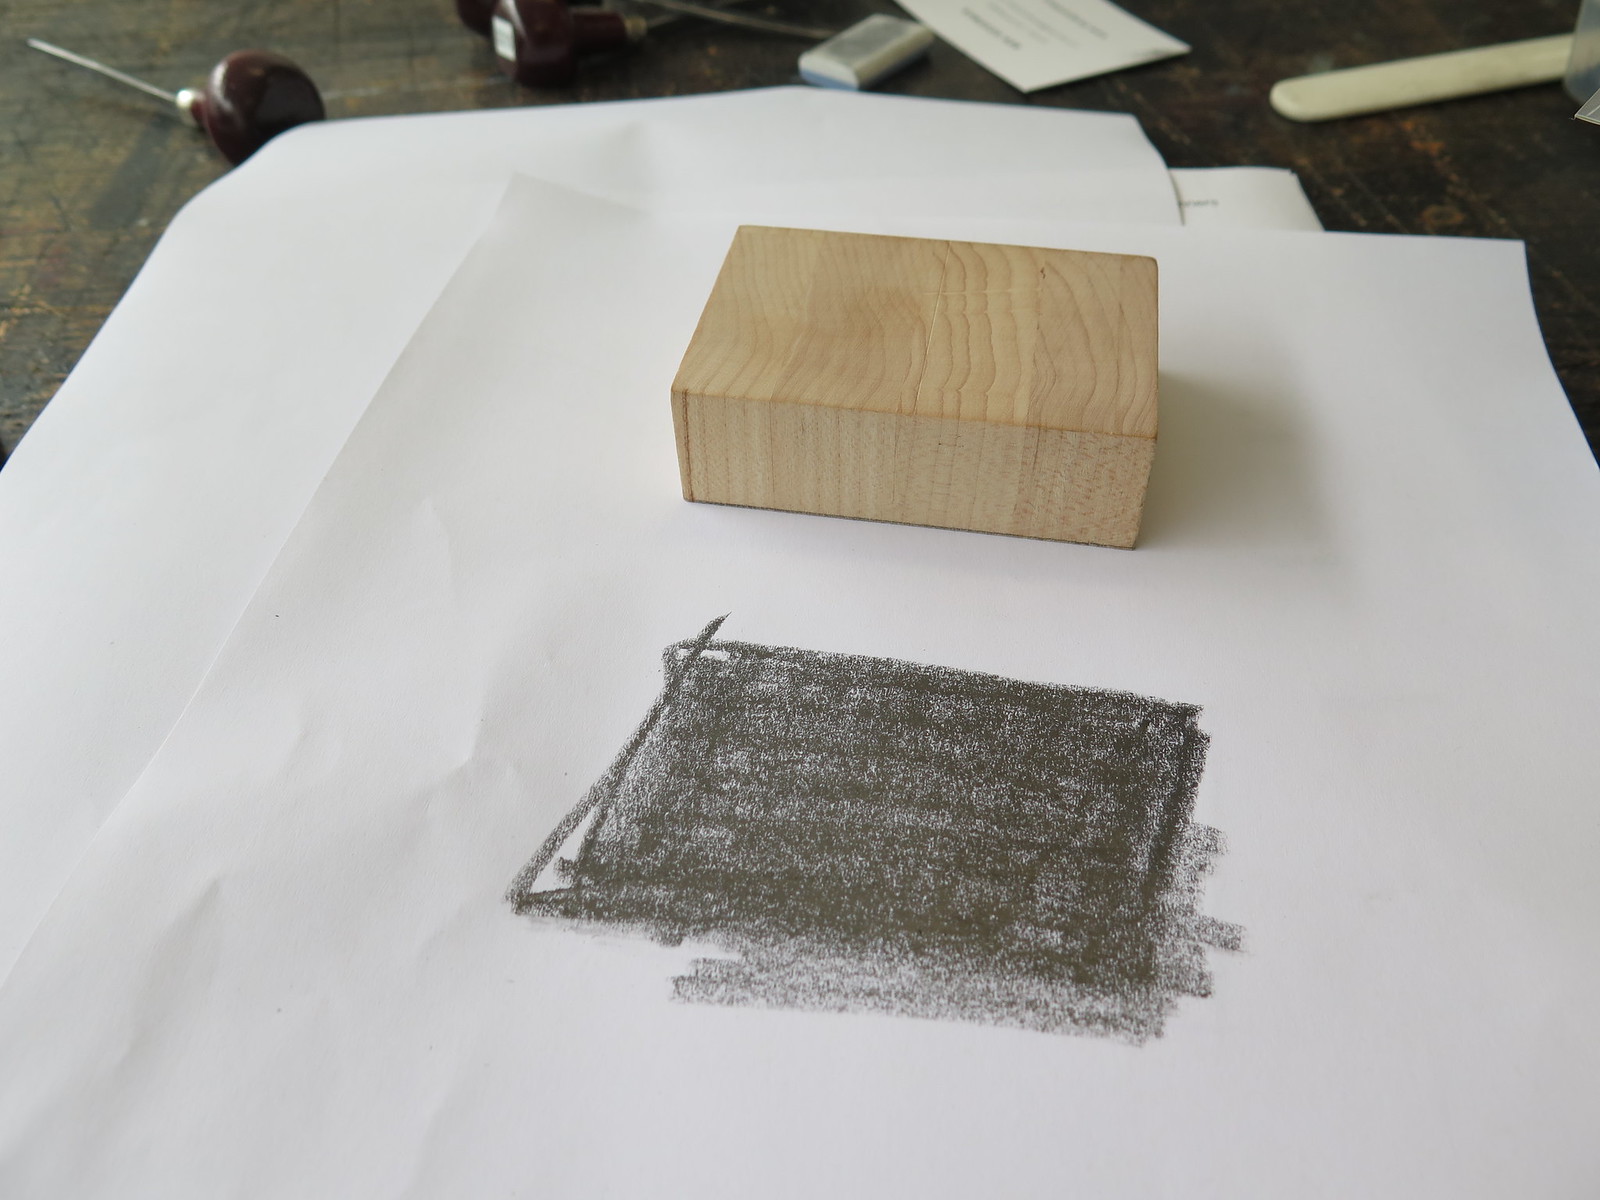 Wood engraving - Preparing image